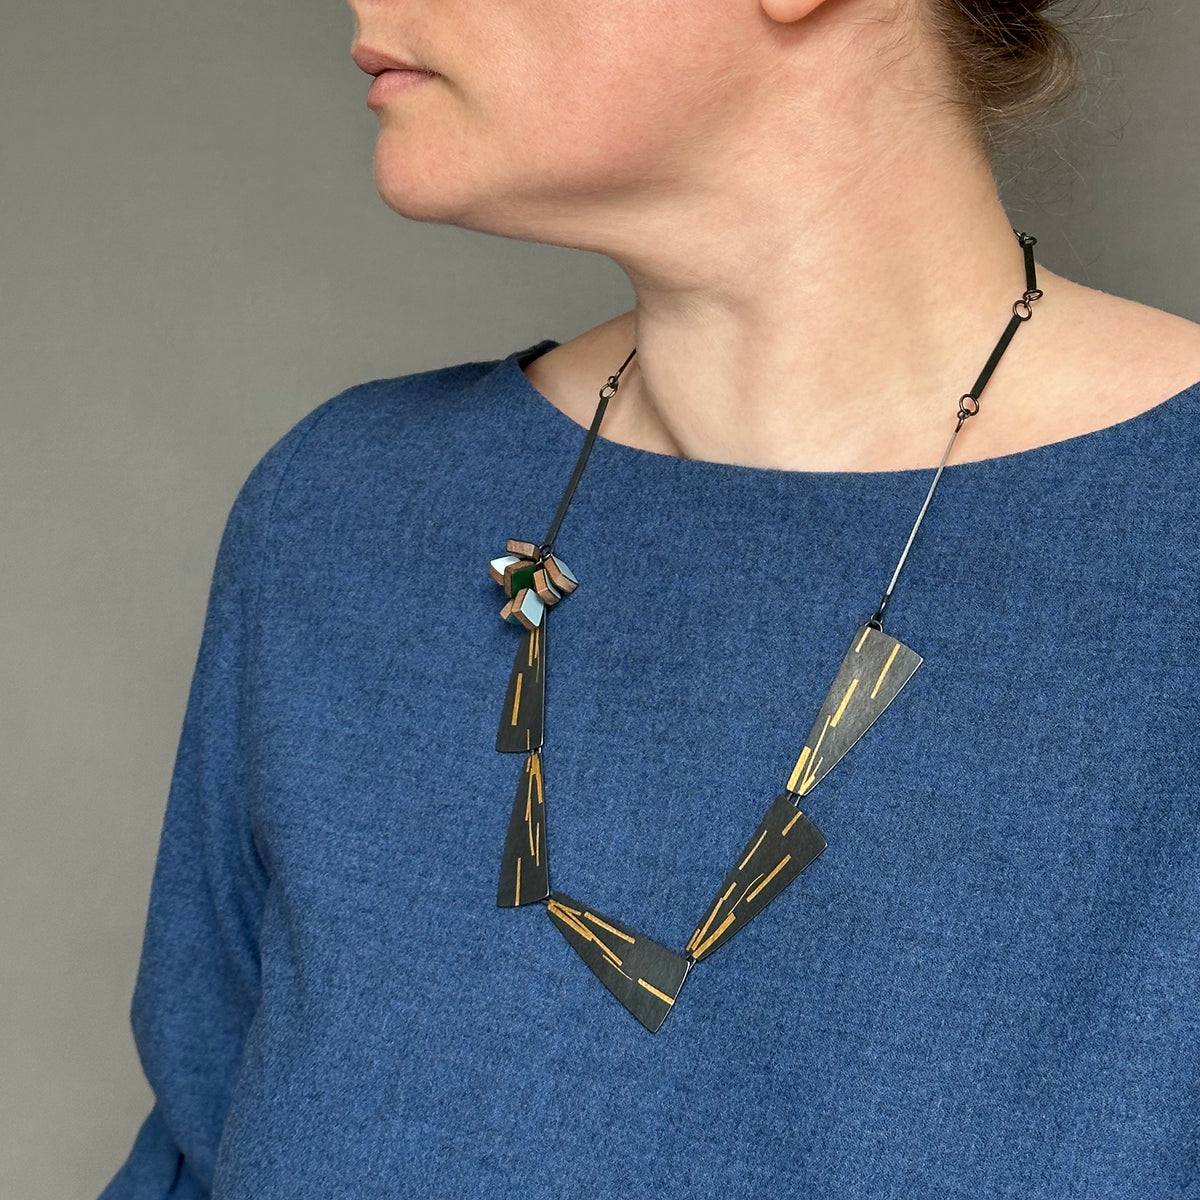 Cluster flight necklace